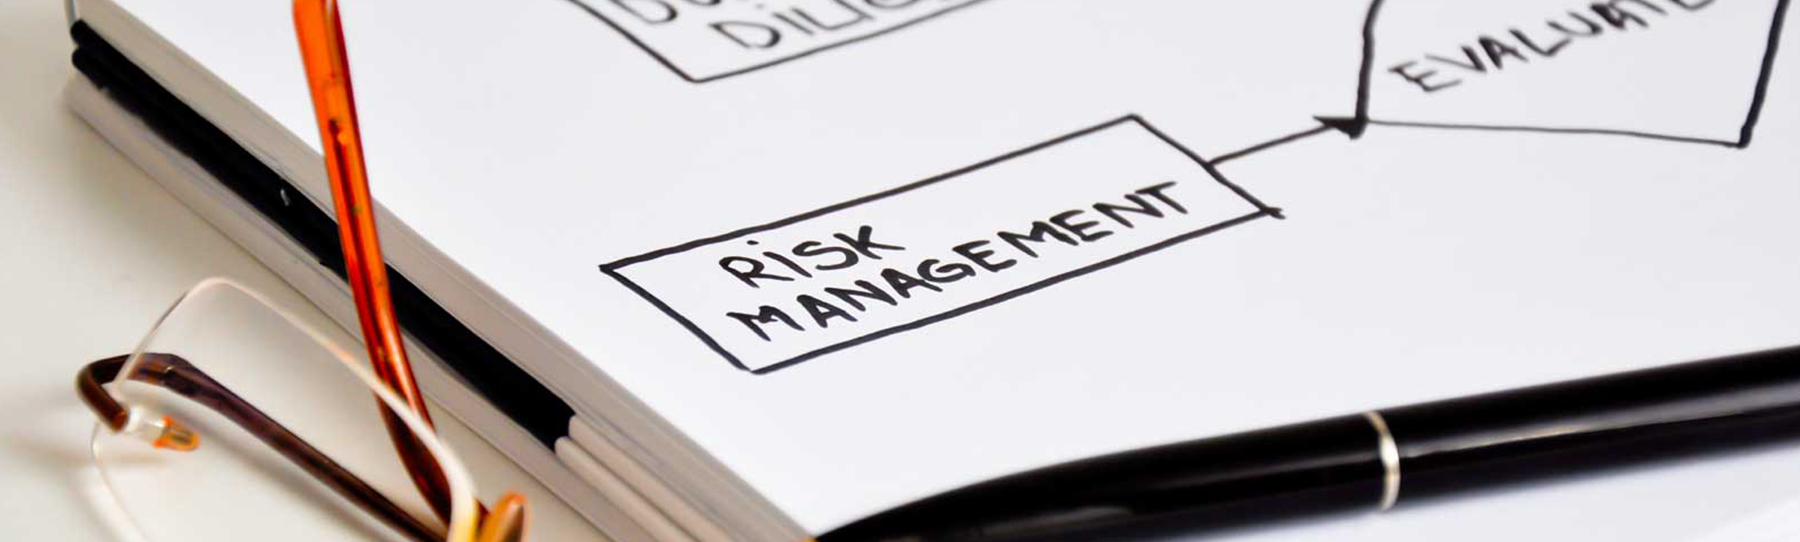 RiskManagement_banner